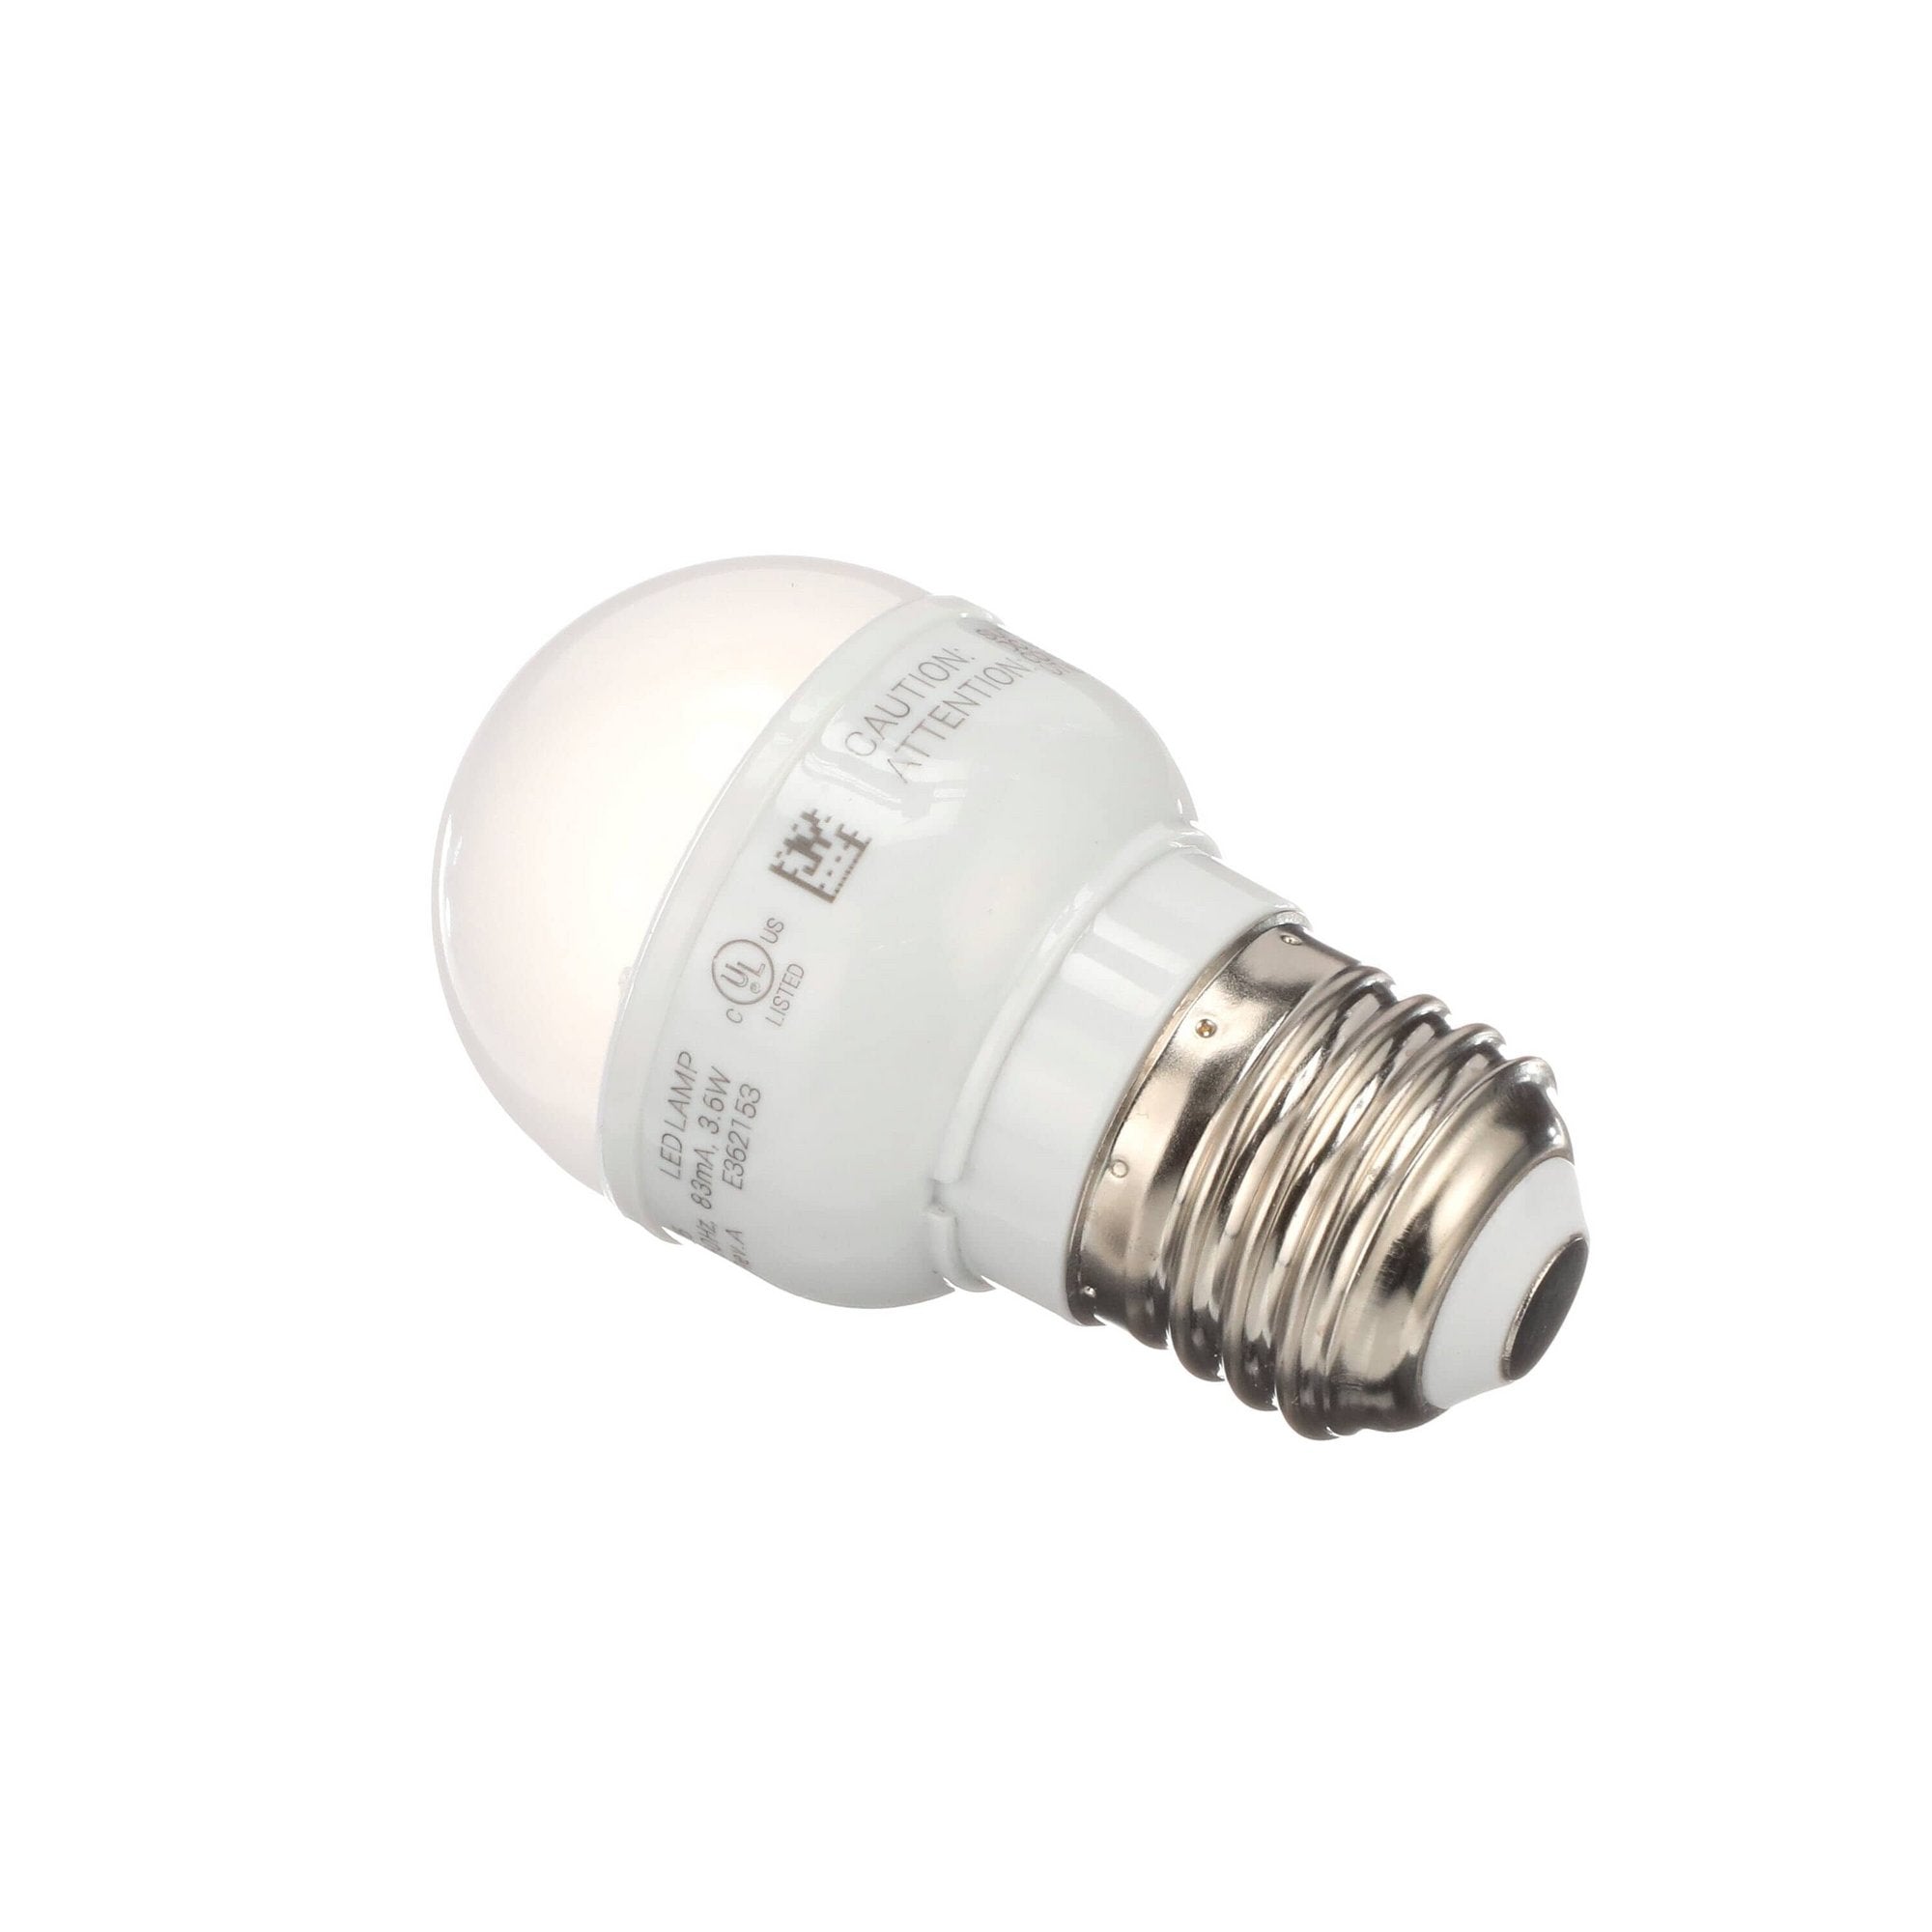 W11216993 - Whirlpool Refrigerator Light Bulb New